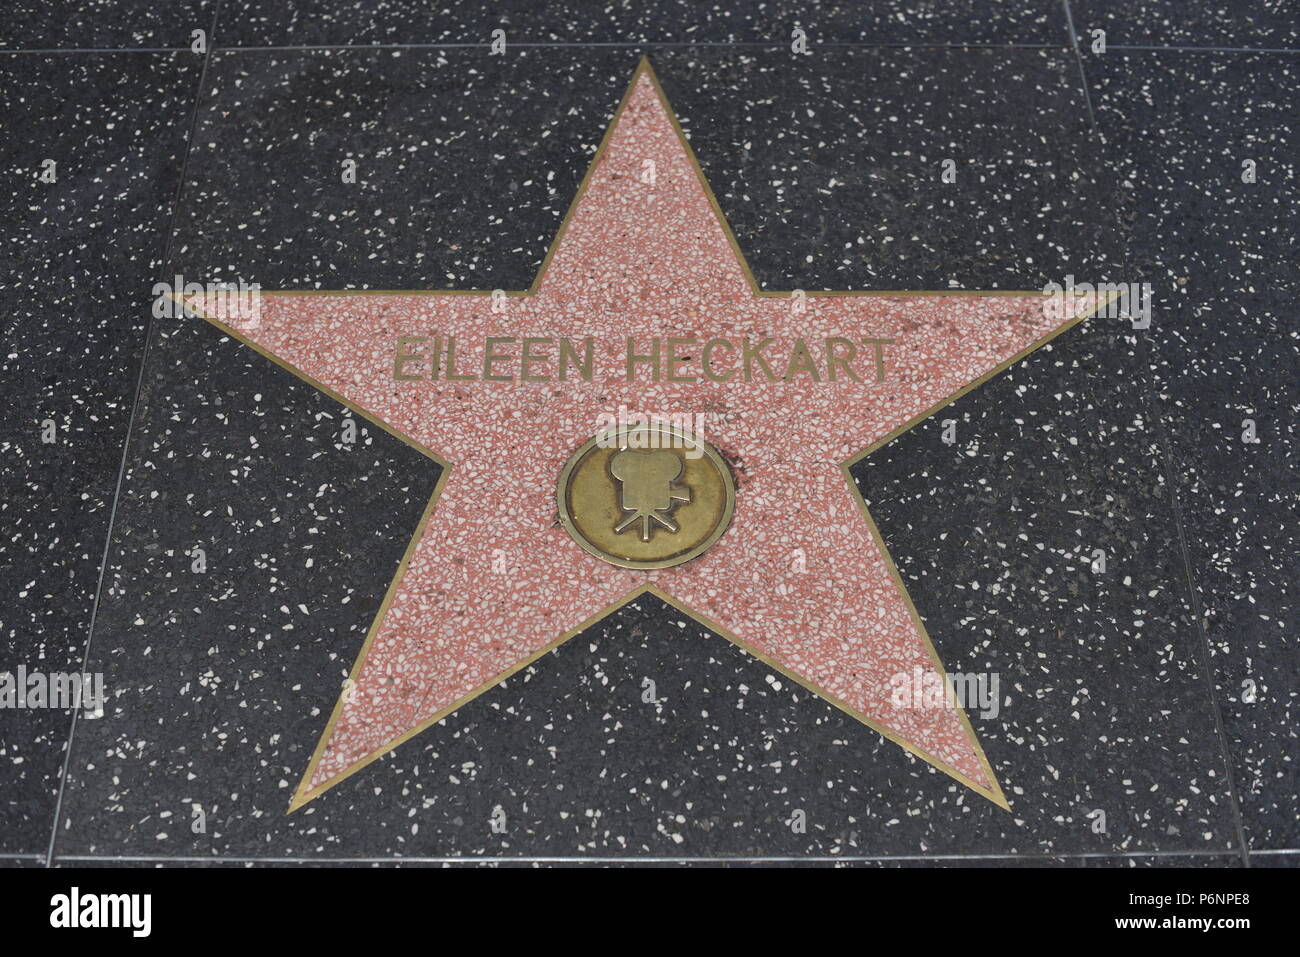 HOLLYWOOD, CA - 29 Giugno: Eileen Heckart stella sulla Hollywood Walk of Fame in Hollywood, la California il 29 giugno 2018. Foto Stock